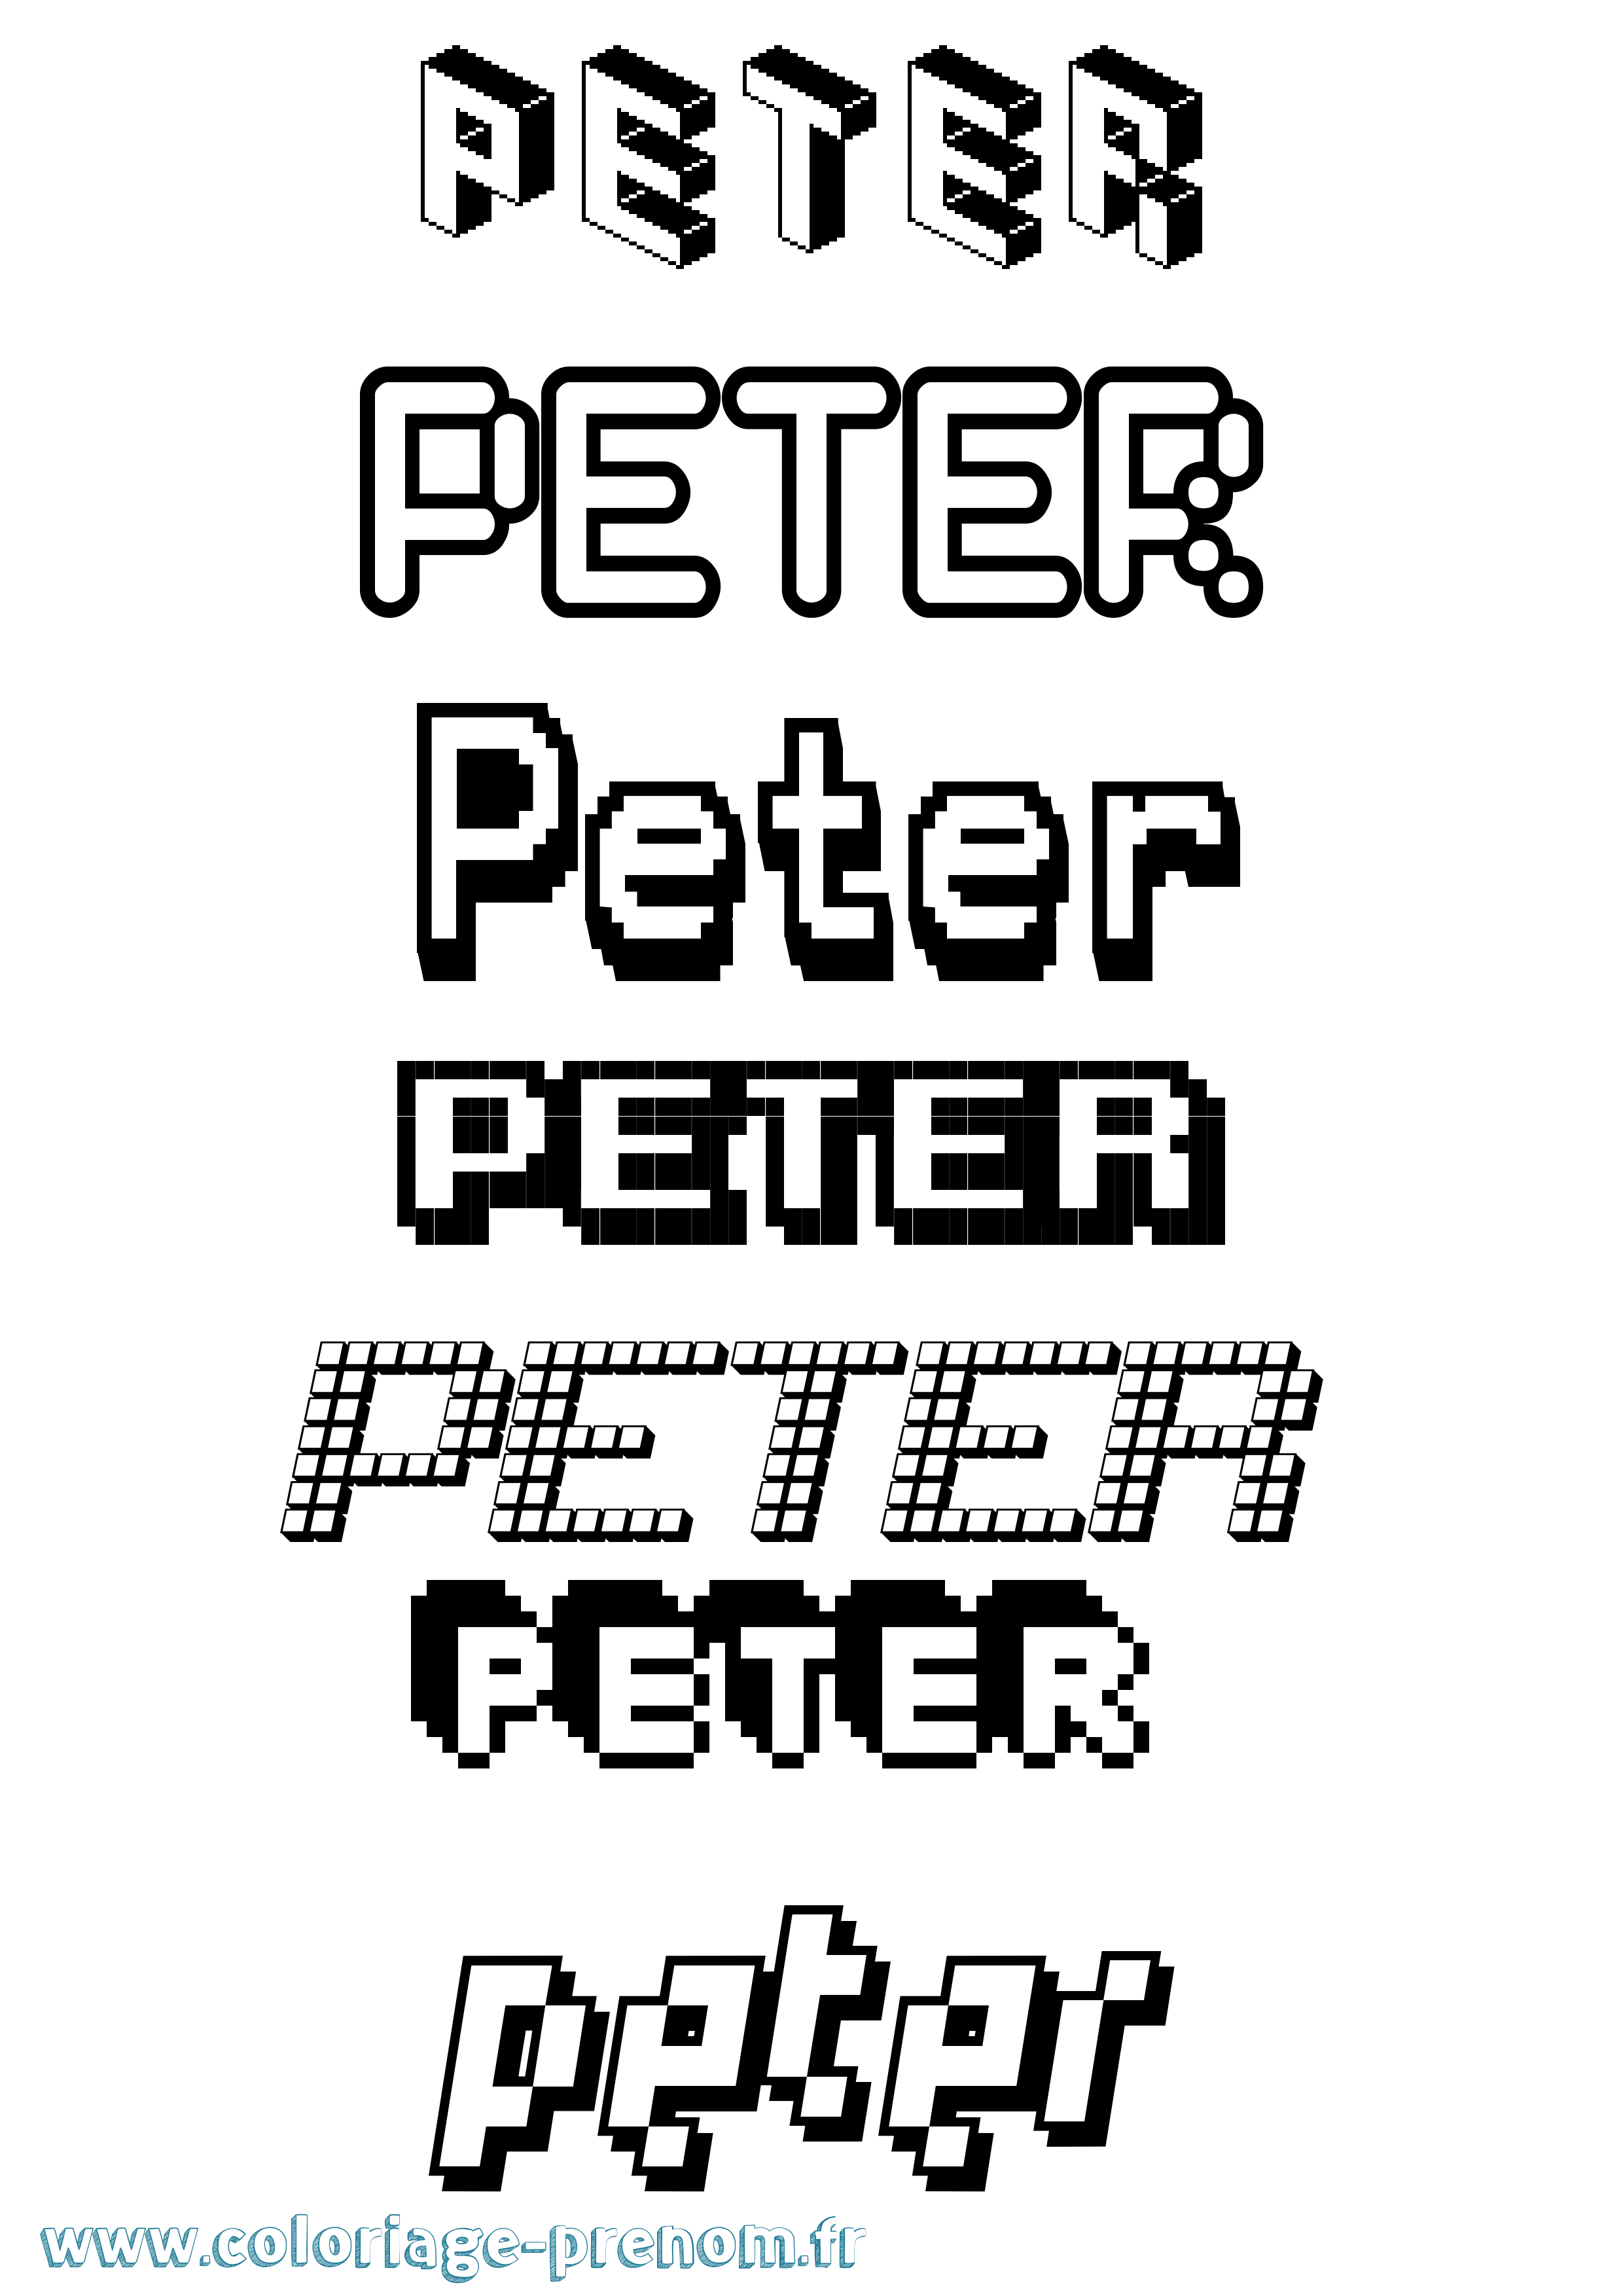 Coloriage prénom Peter